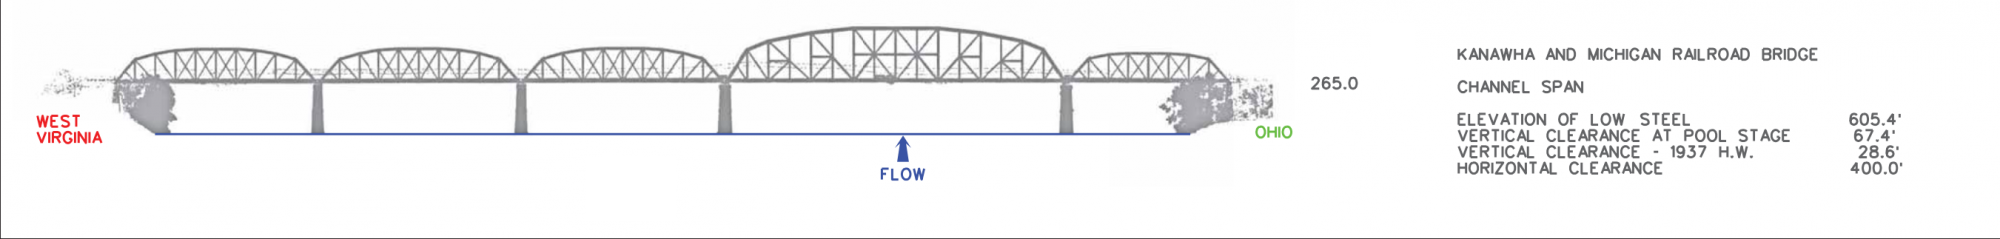 Kanawha & Michigan R.R. Bridge Clearances | Bridge Calculator LLC